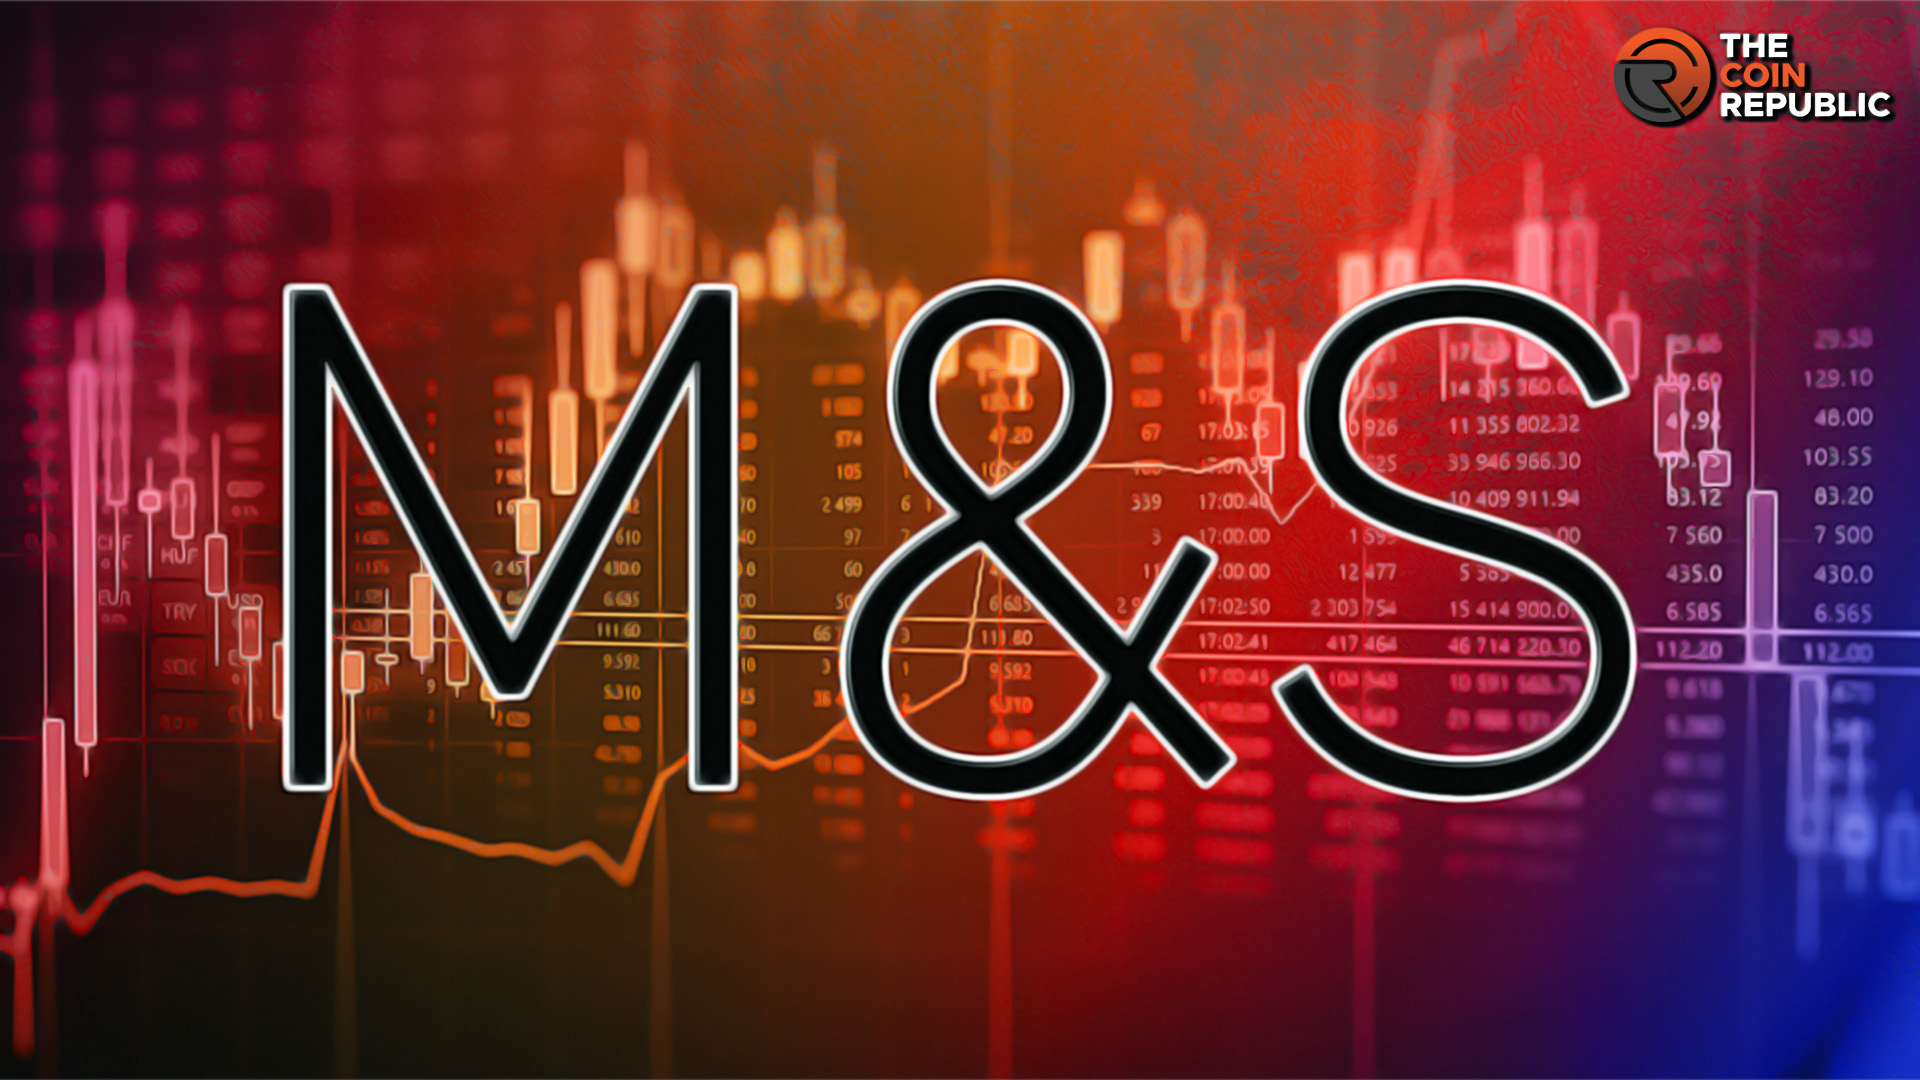 MKS Stock Price: Firm’s Turnaround Plans Make the Trend Bullish